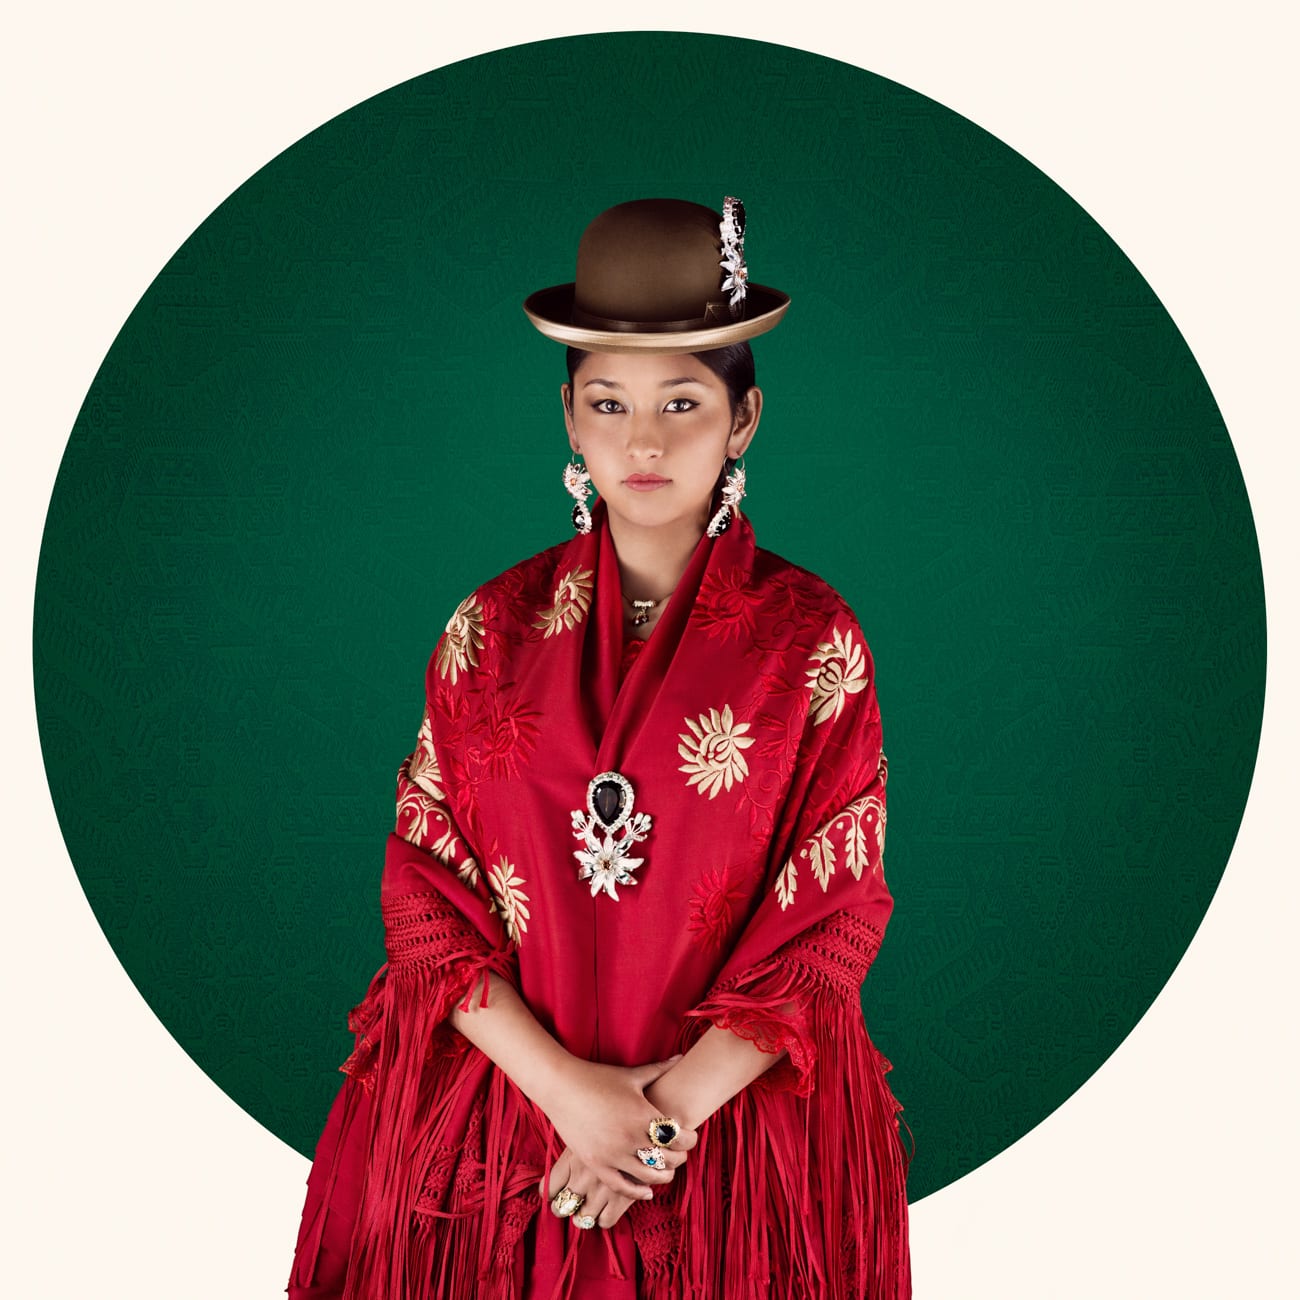 Photograph of a Cholita